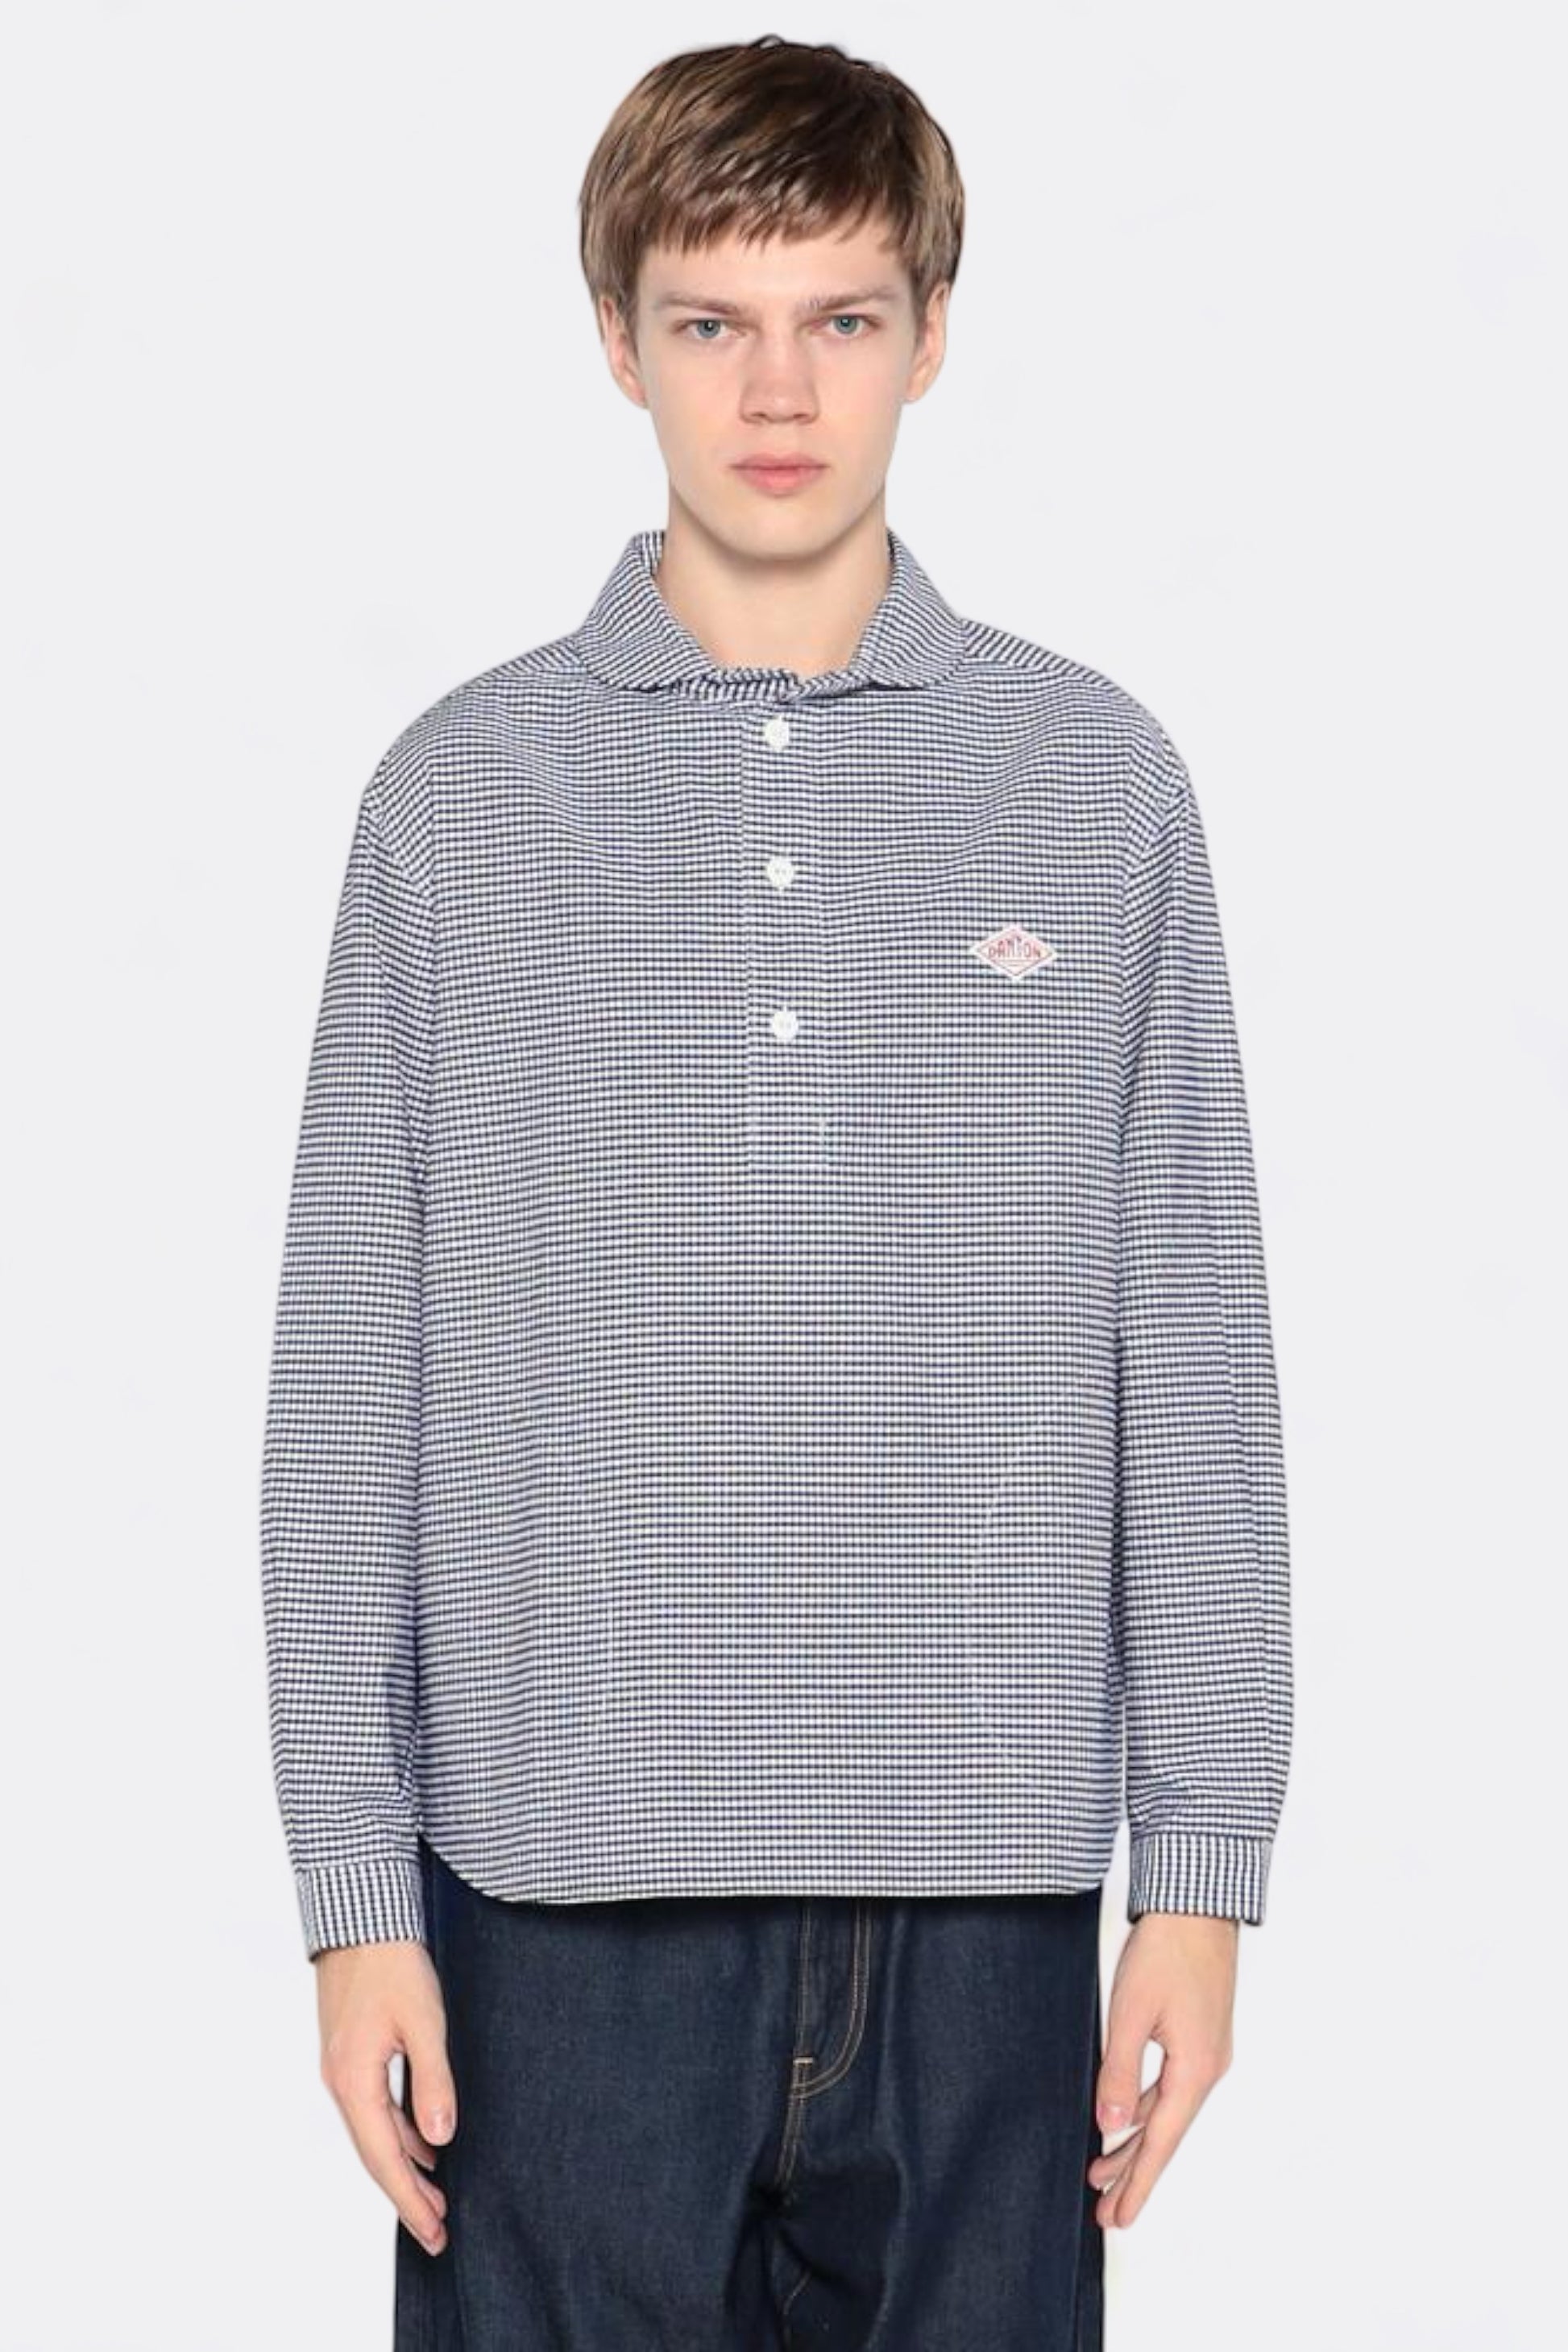 Danton - Oxford Round Collar Pullover Shirt Pattern (Navy Gingham)